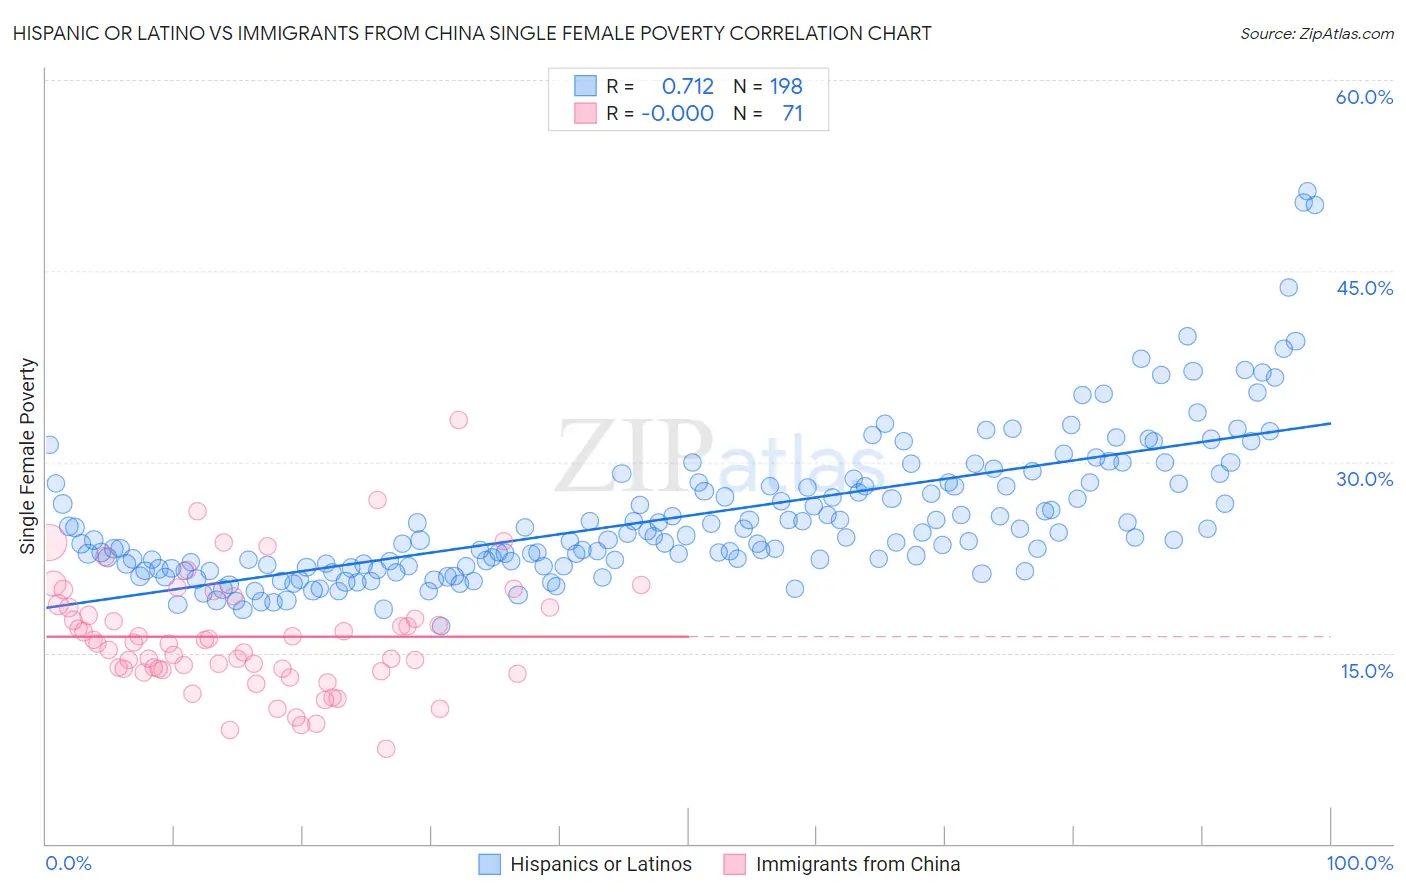 Hispanic or Latino vs Immigrants from China Single Female Poverty